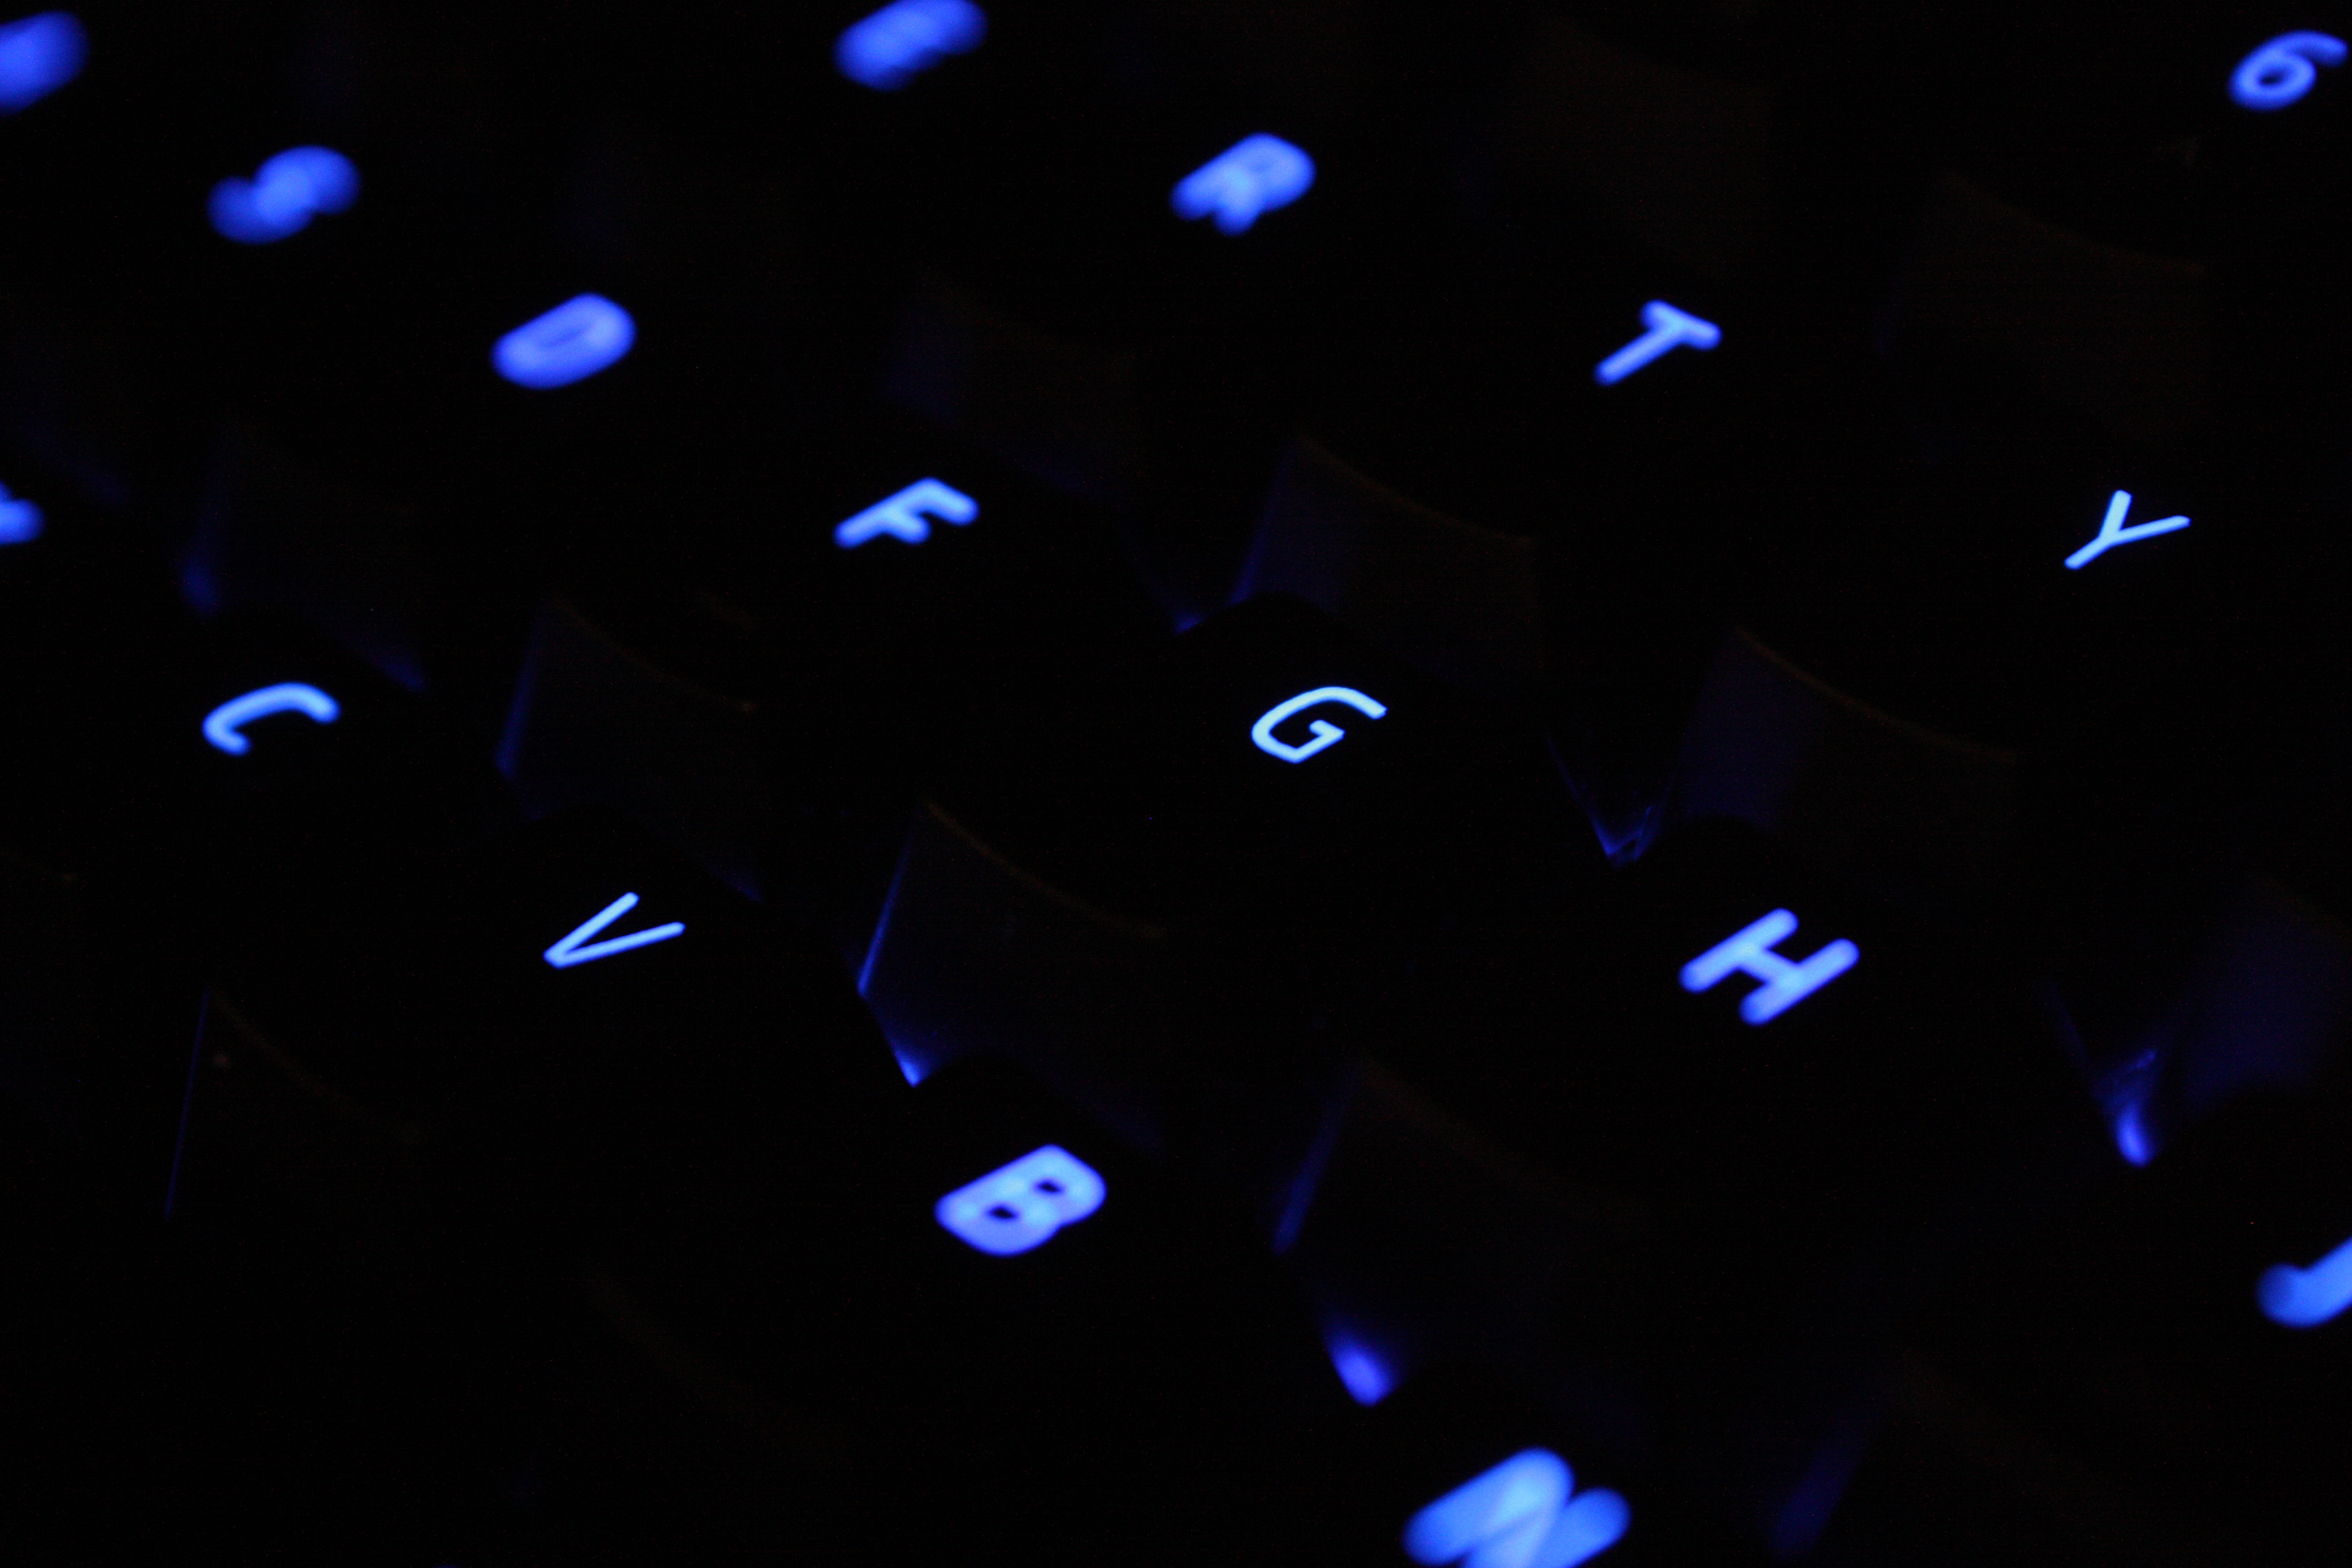 Black keyboard with blue glowing keys in the dark